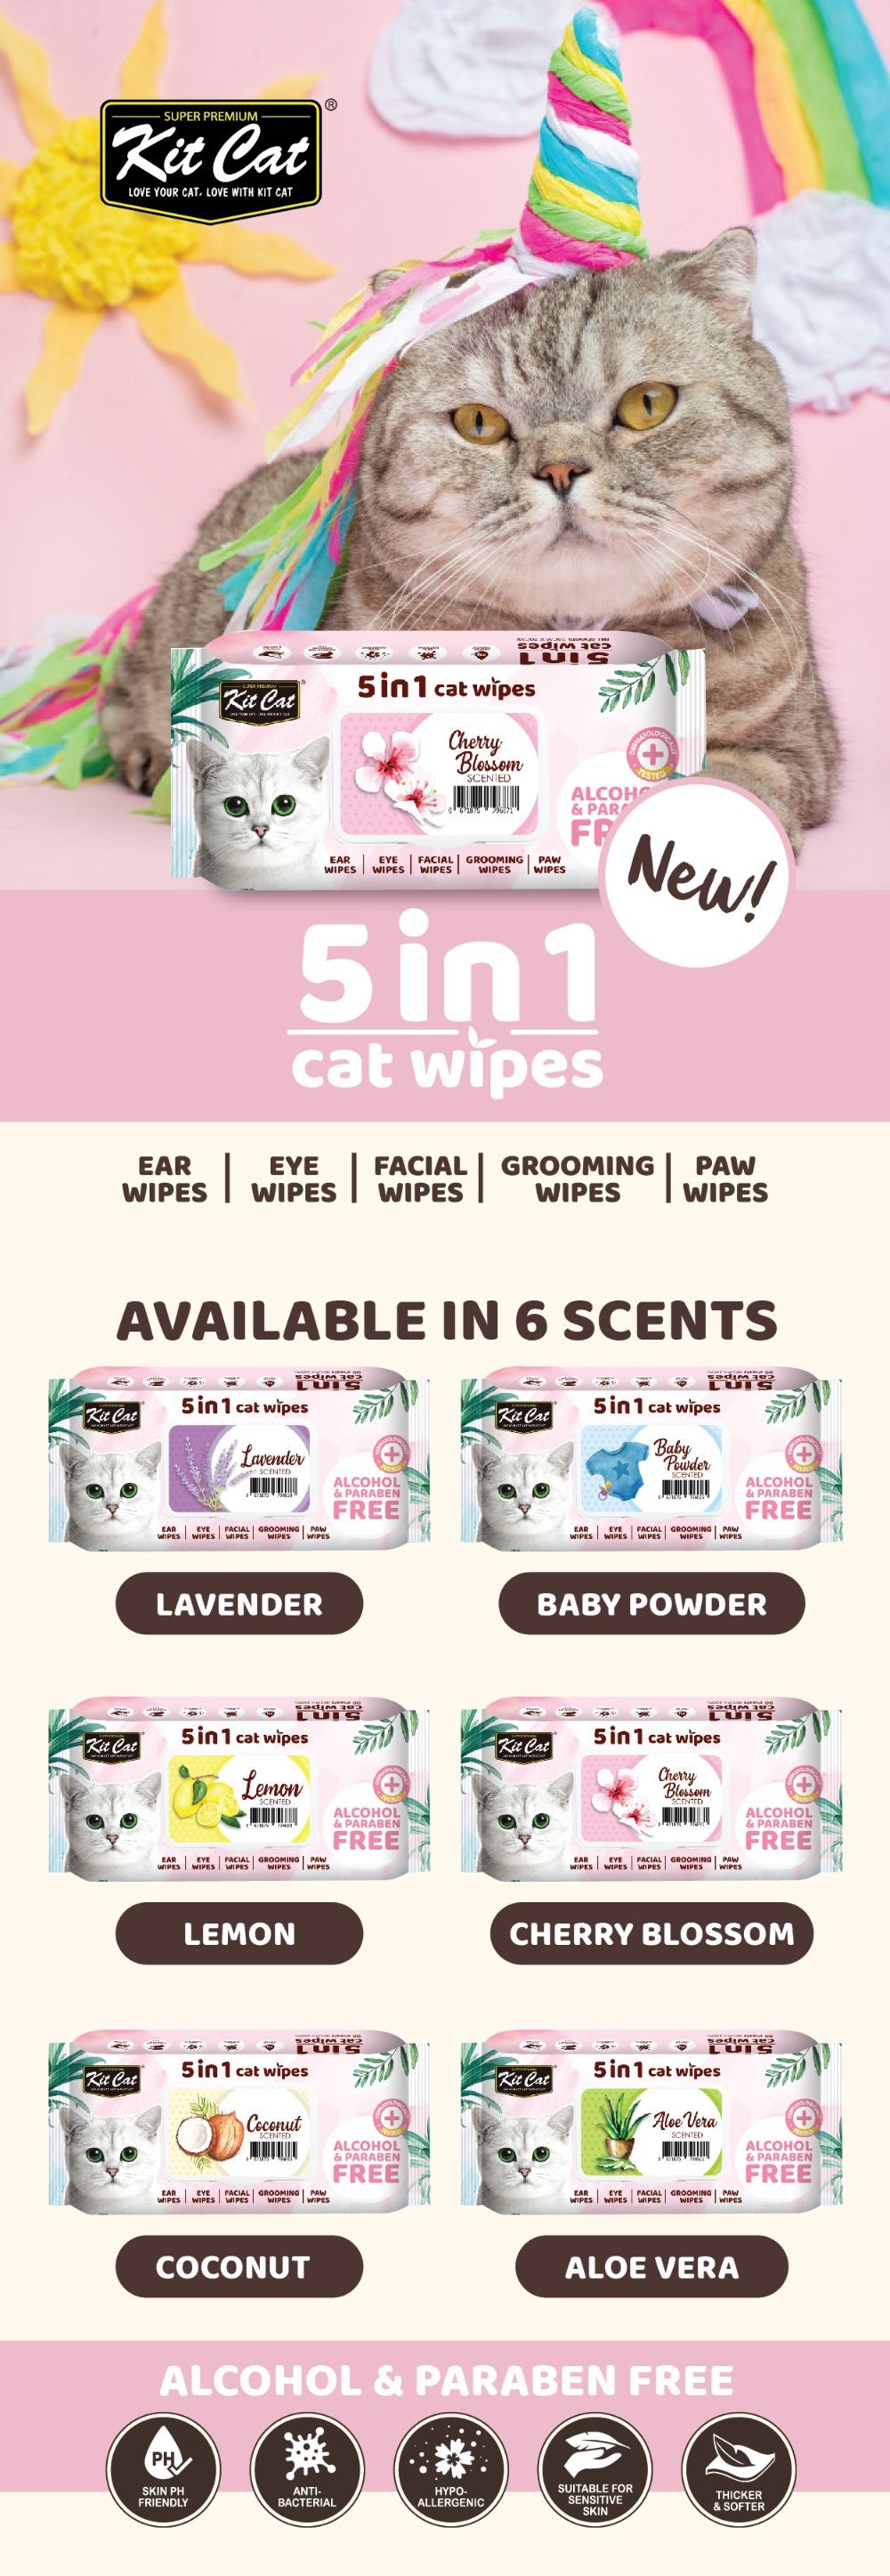 [CTN OF 12] Kit Cat 5 in 1 Cat Wipes - Baby Powder (12x80pcs) | Paraben & Alcohol Free